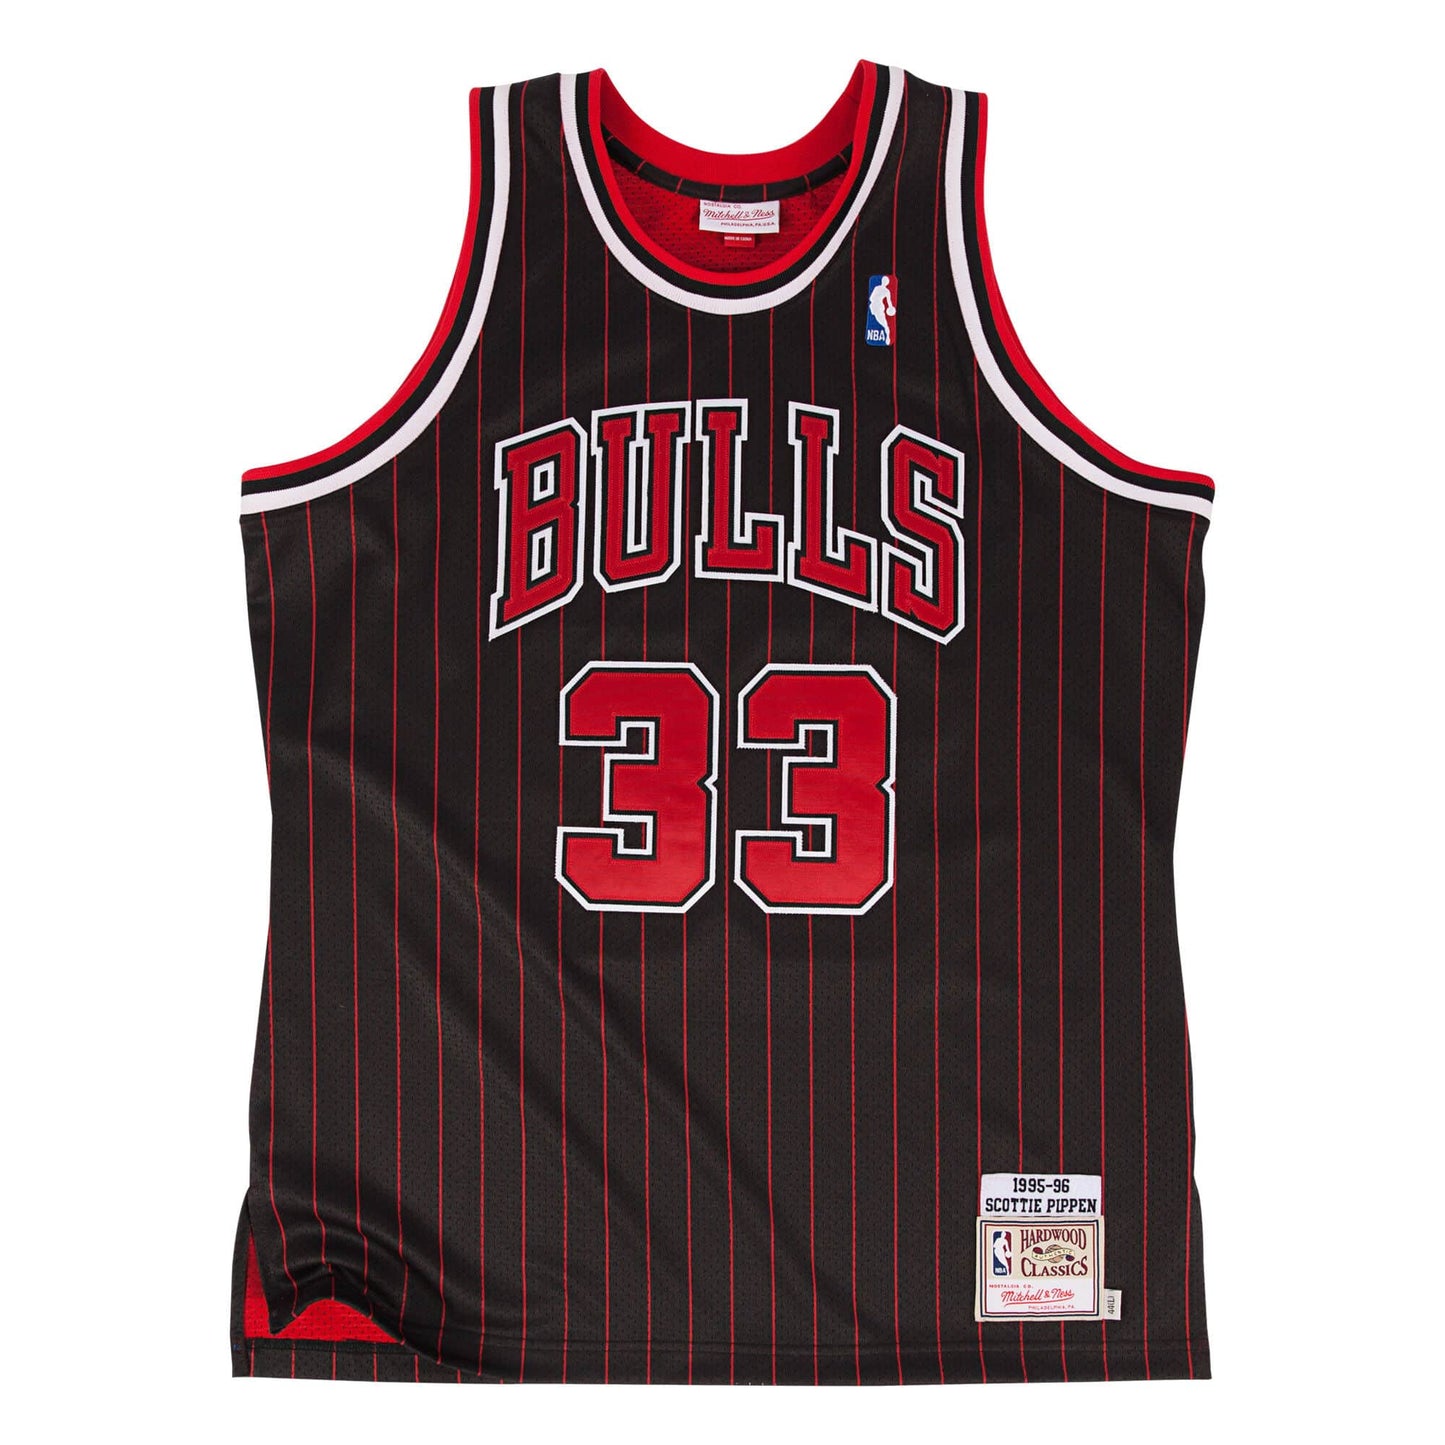 Authentic Scottie Pippen Chicago Bulls 1995-96 Jersey